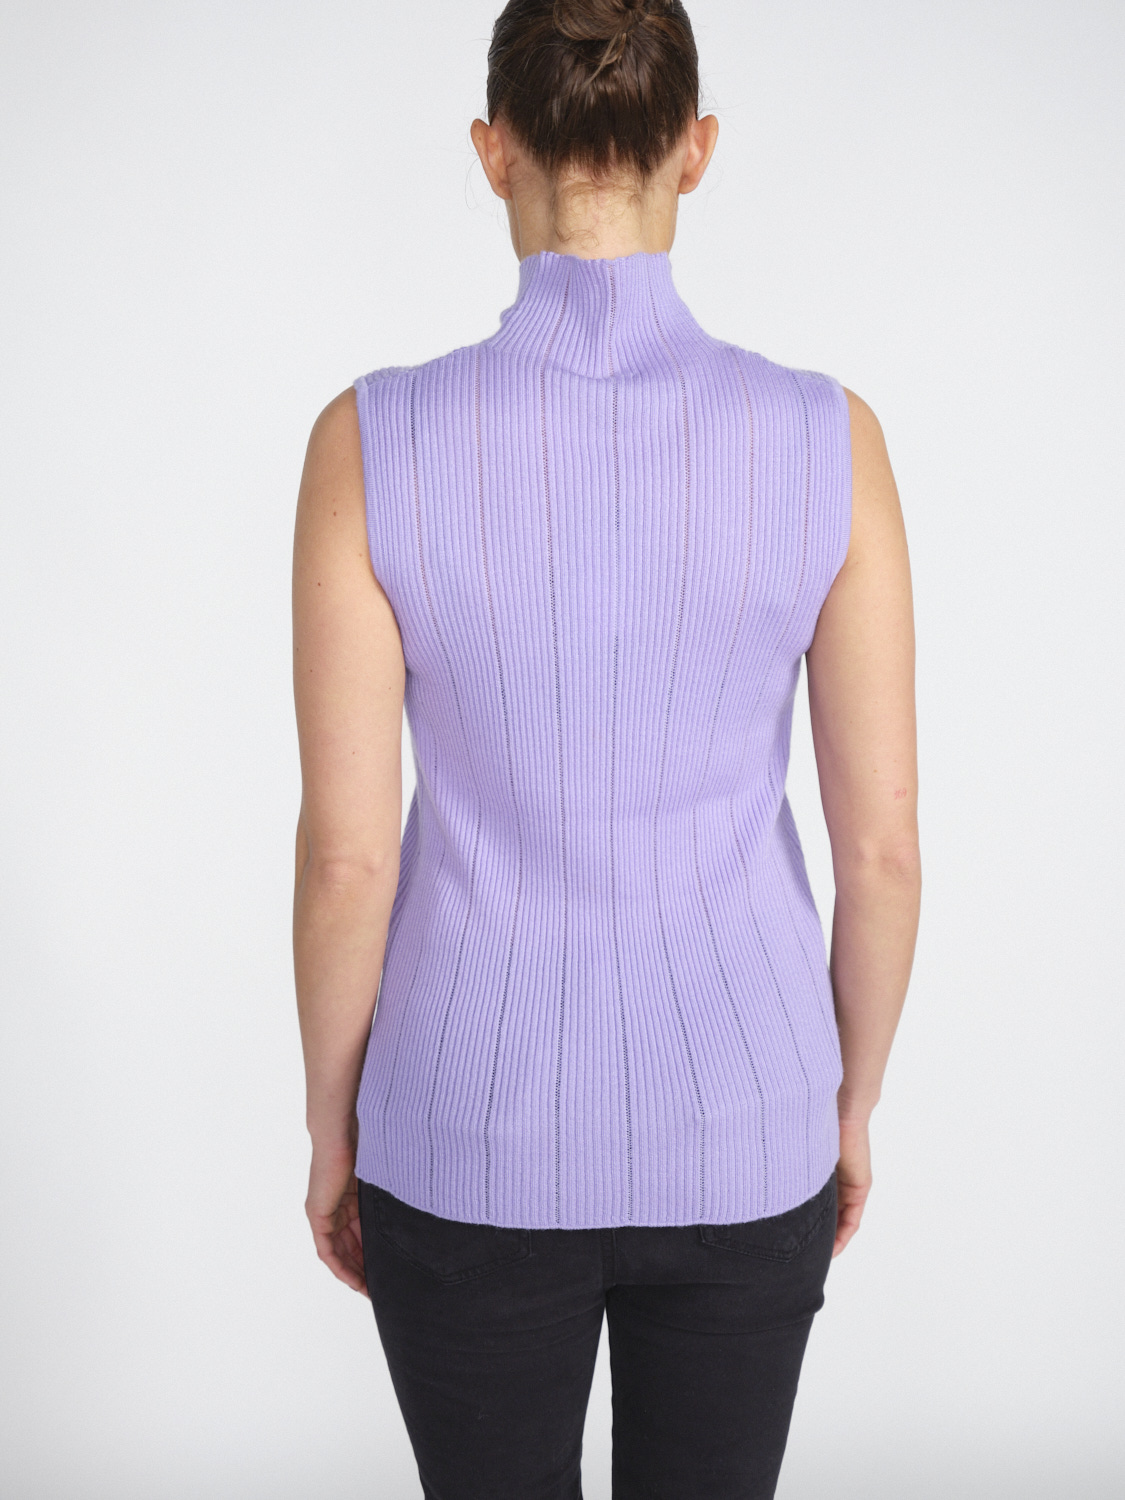 Iris von Arnim Loulou - Knitted top in cashmere-silk blend  lila M